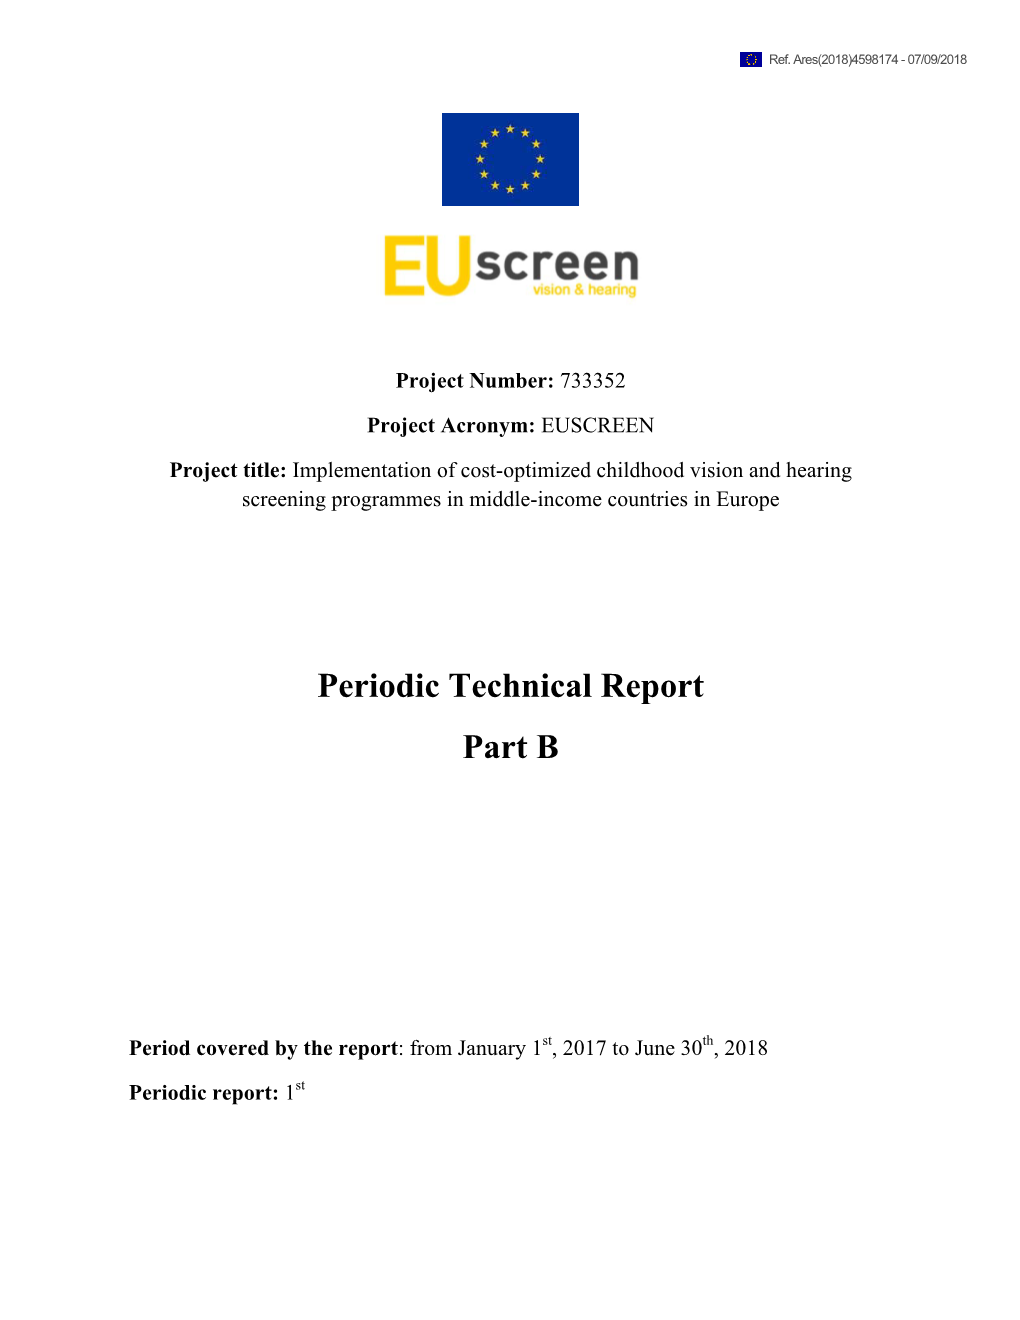 Periodic Technical Report Part B